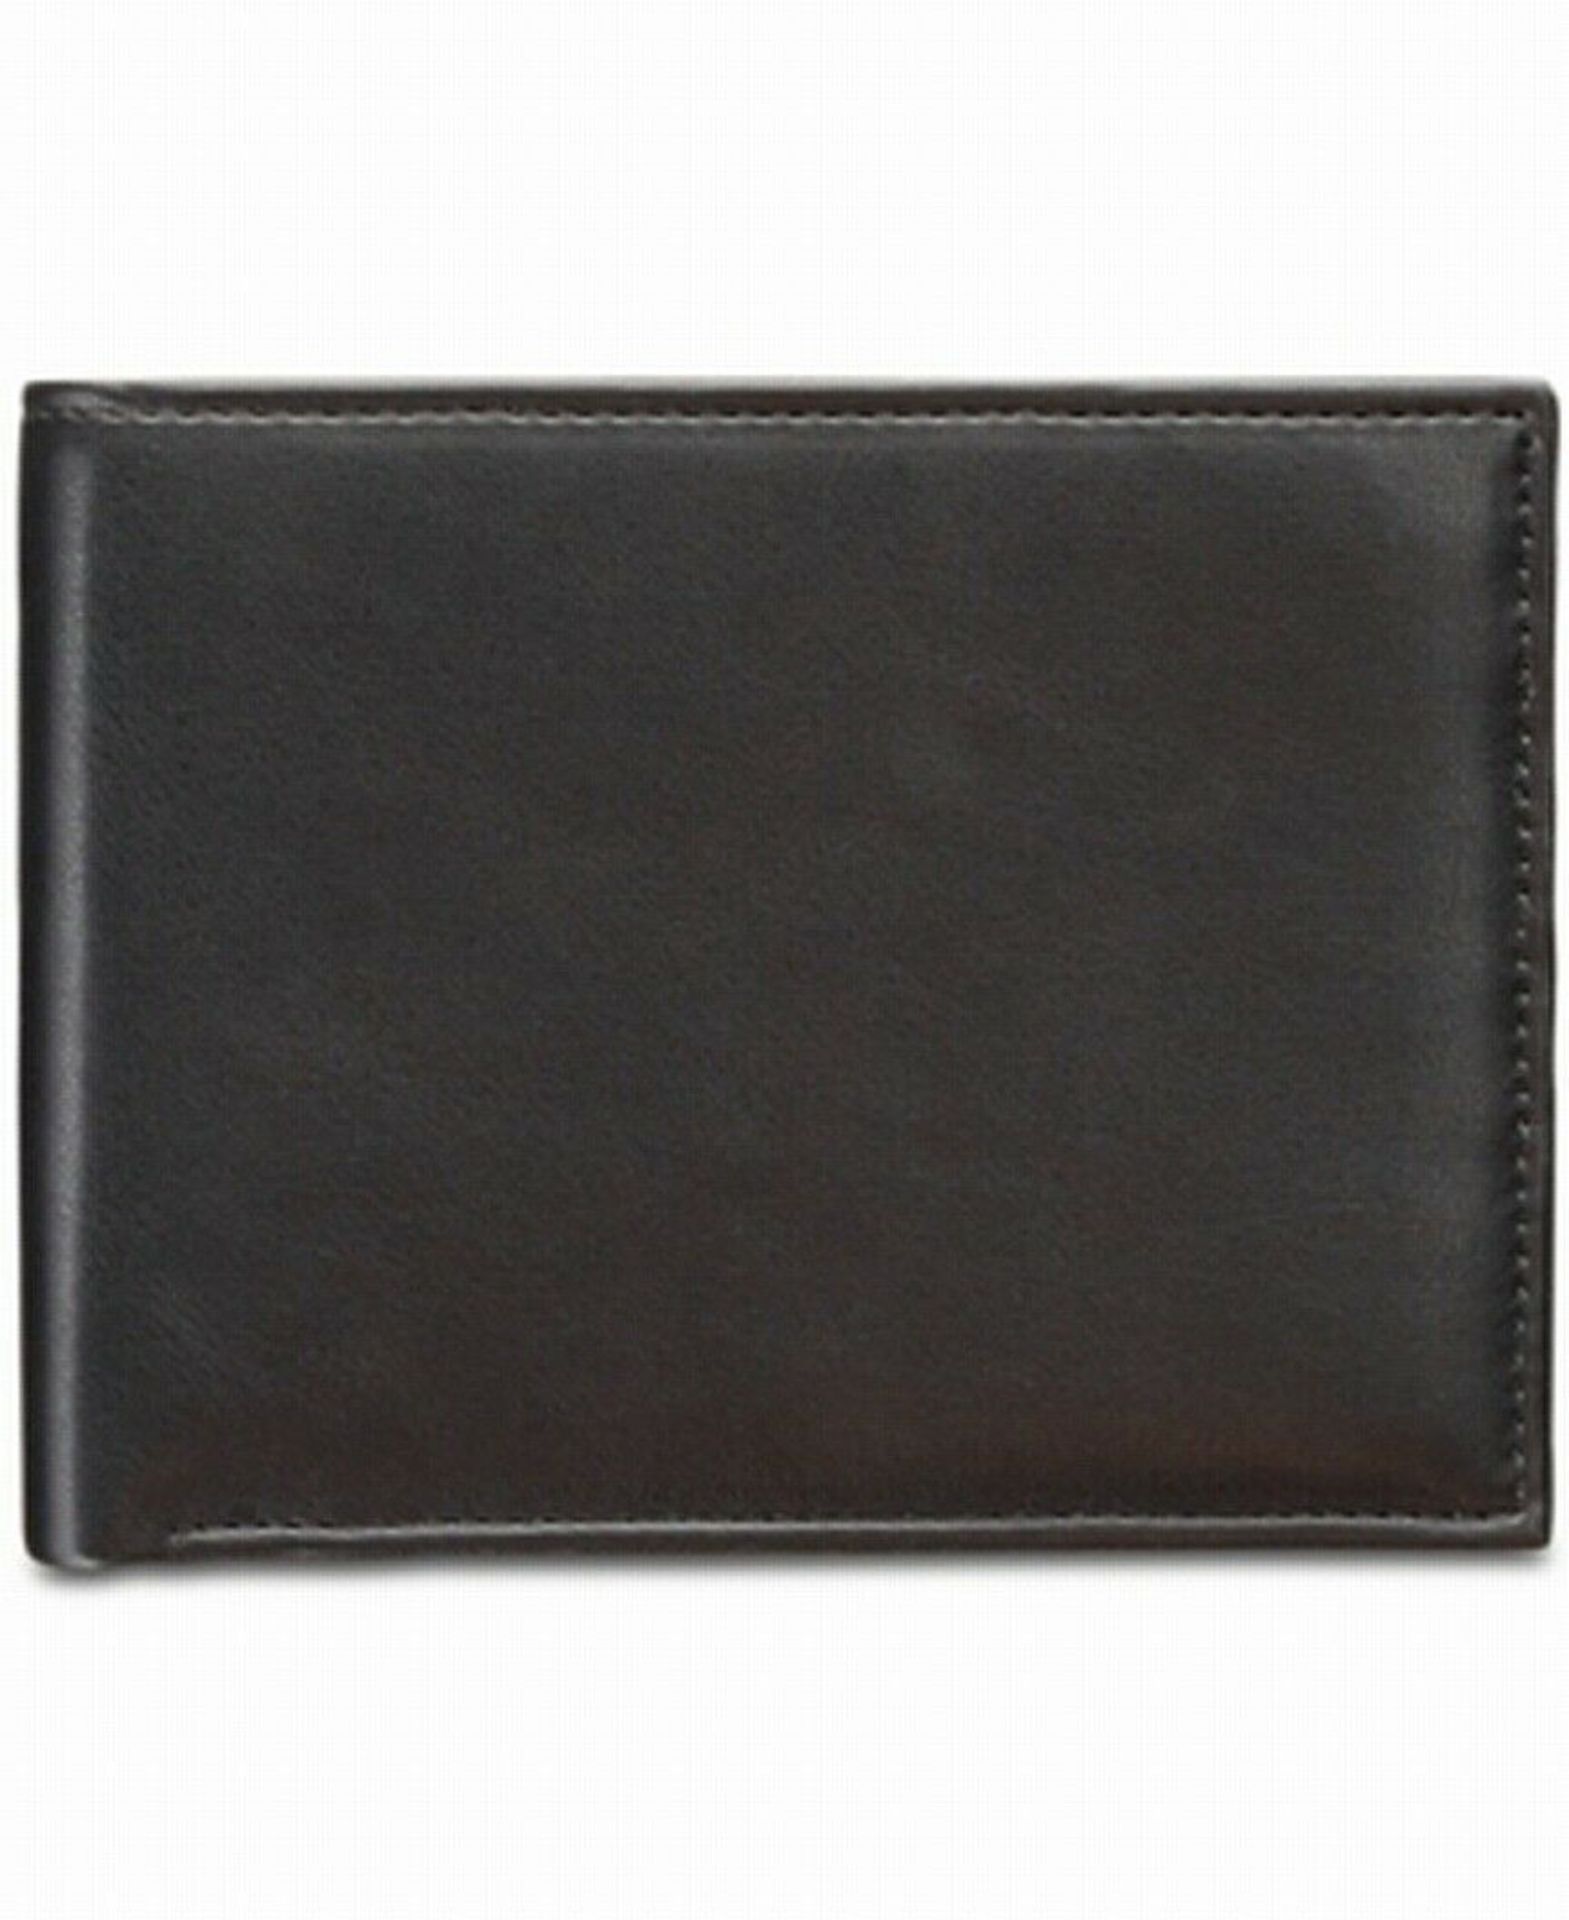 Perry Ellis Men's Wallet Black Manhattan Smooth Leather Bifold Passcase Rrp £35